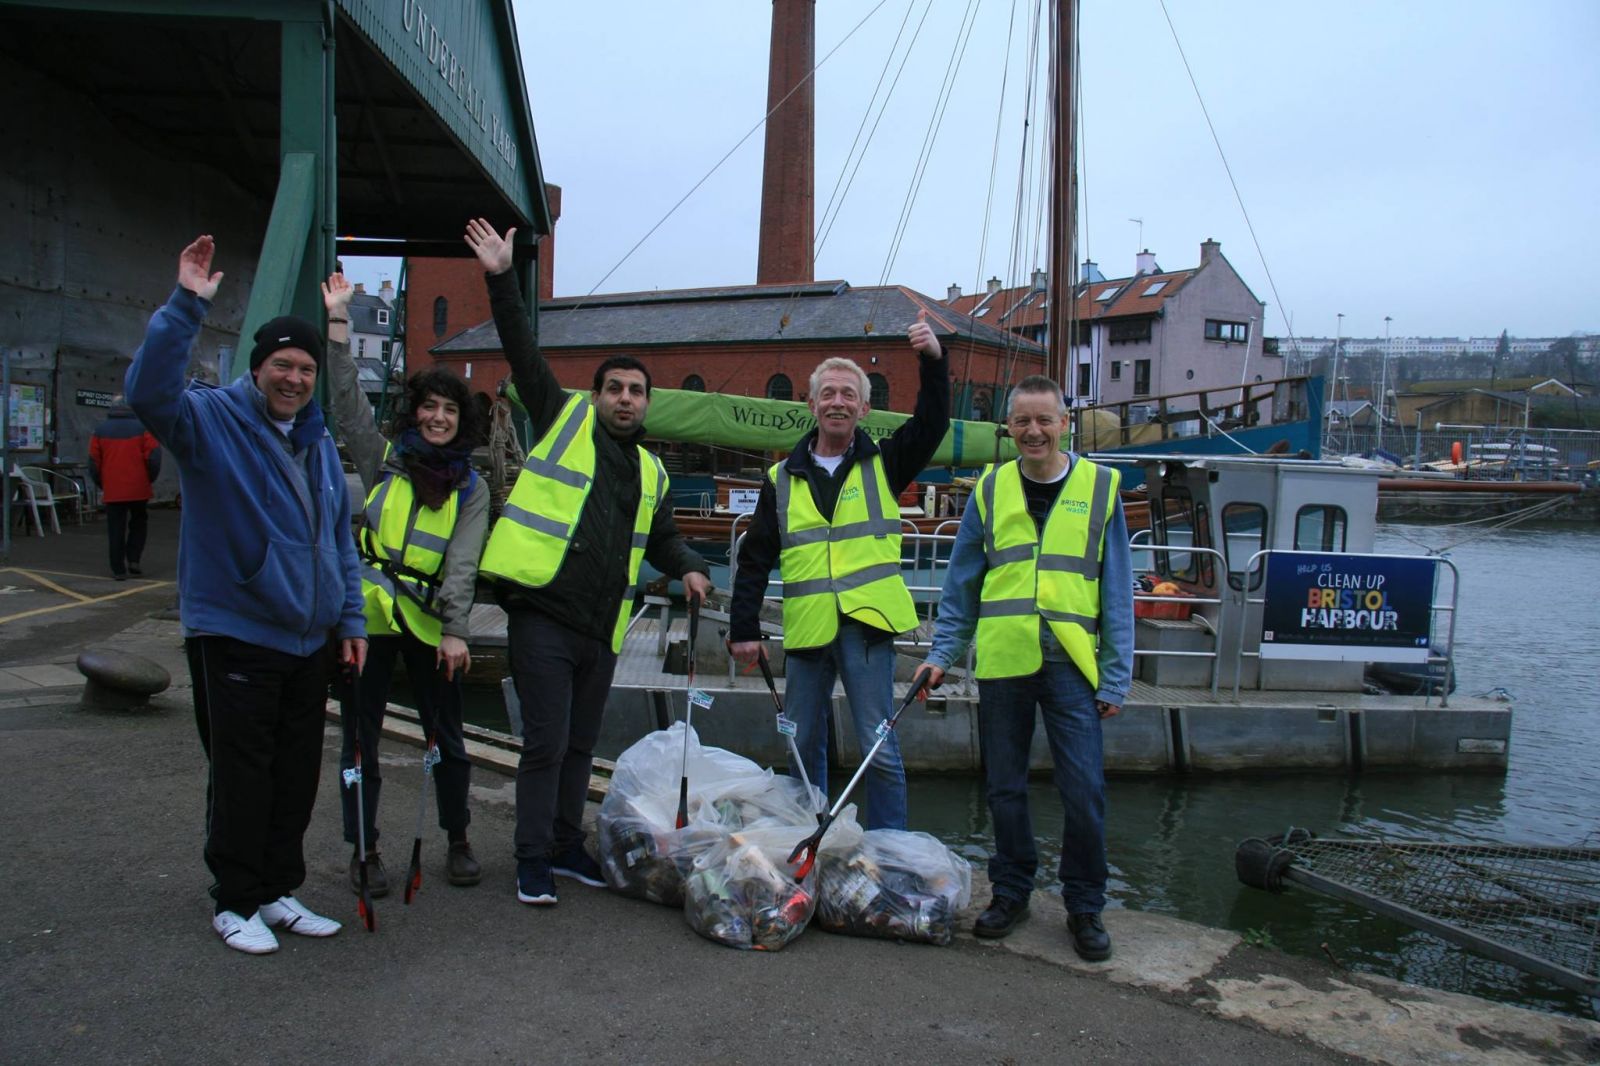 Bristol Harbour Clean Up